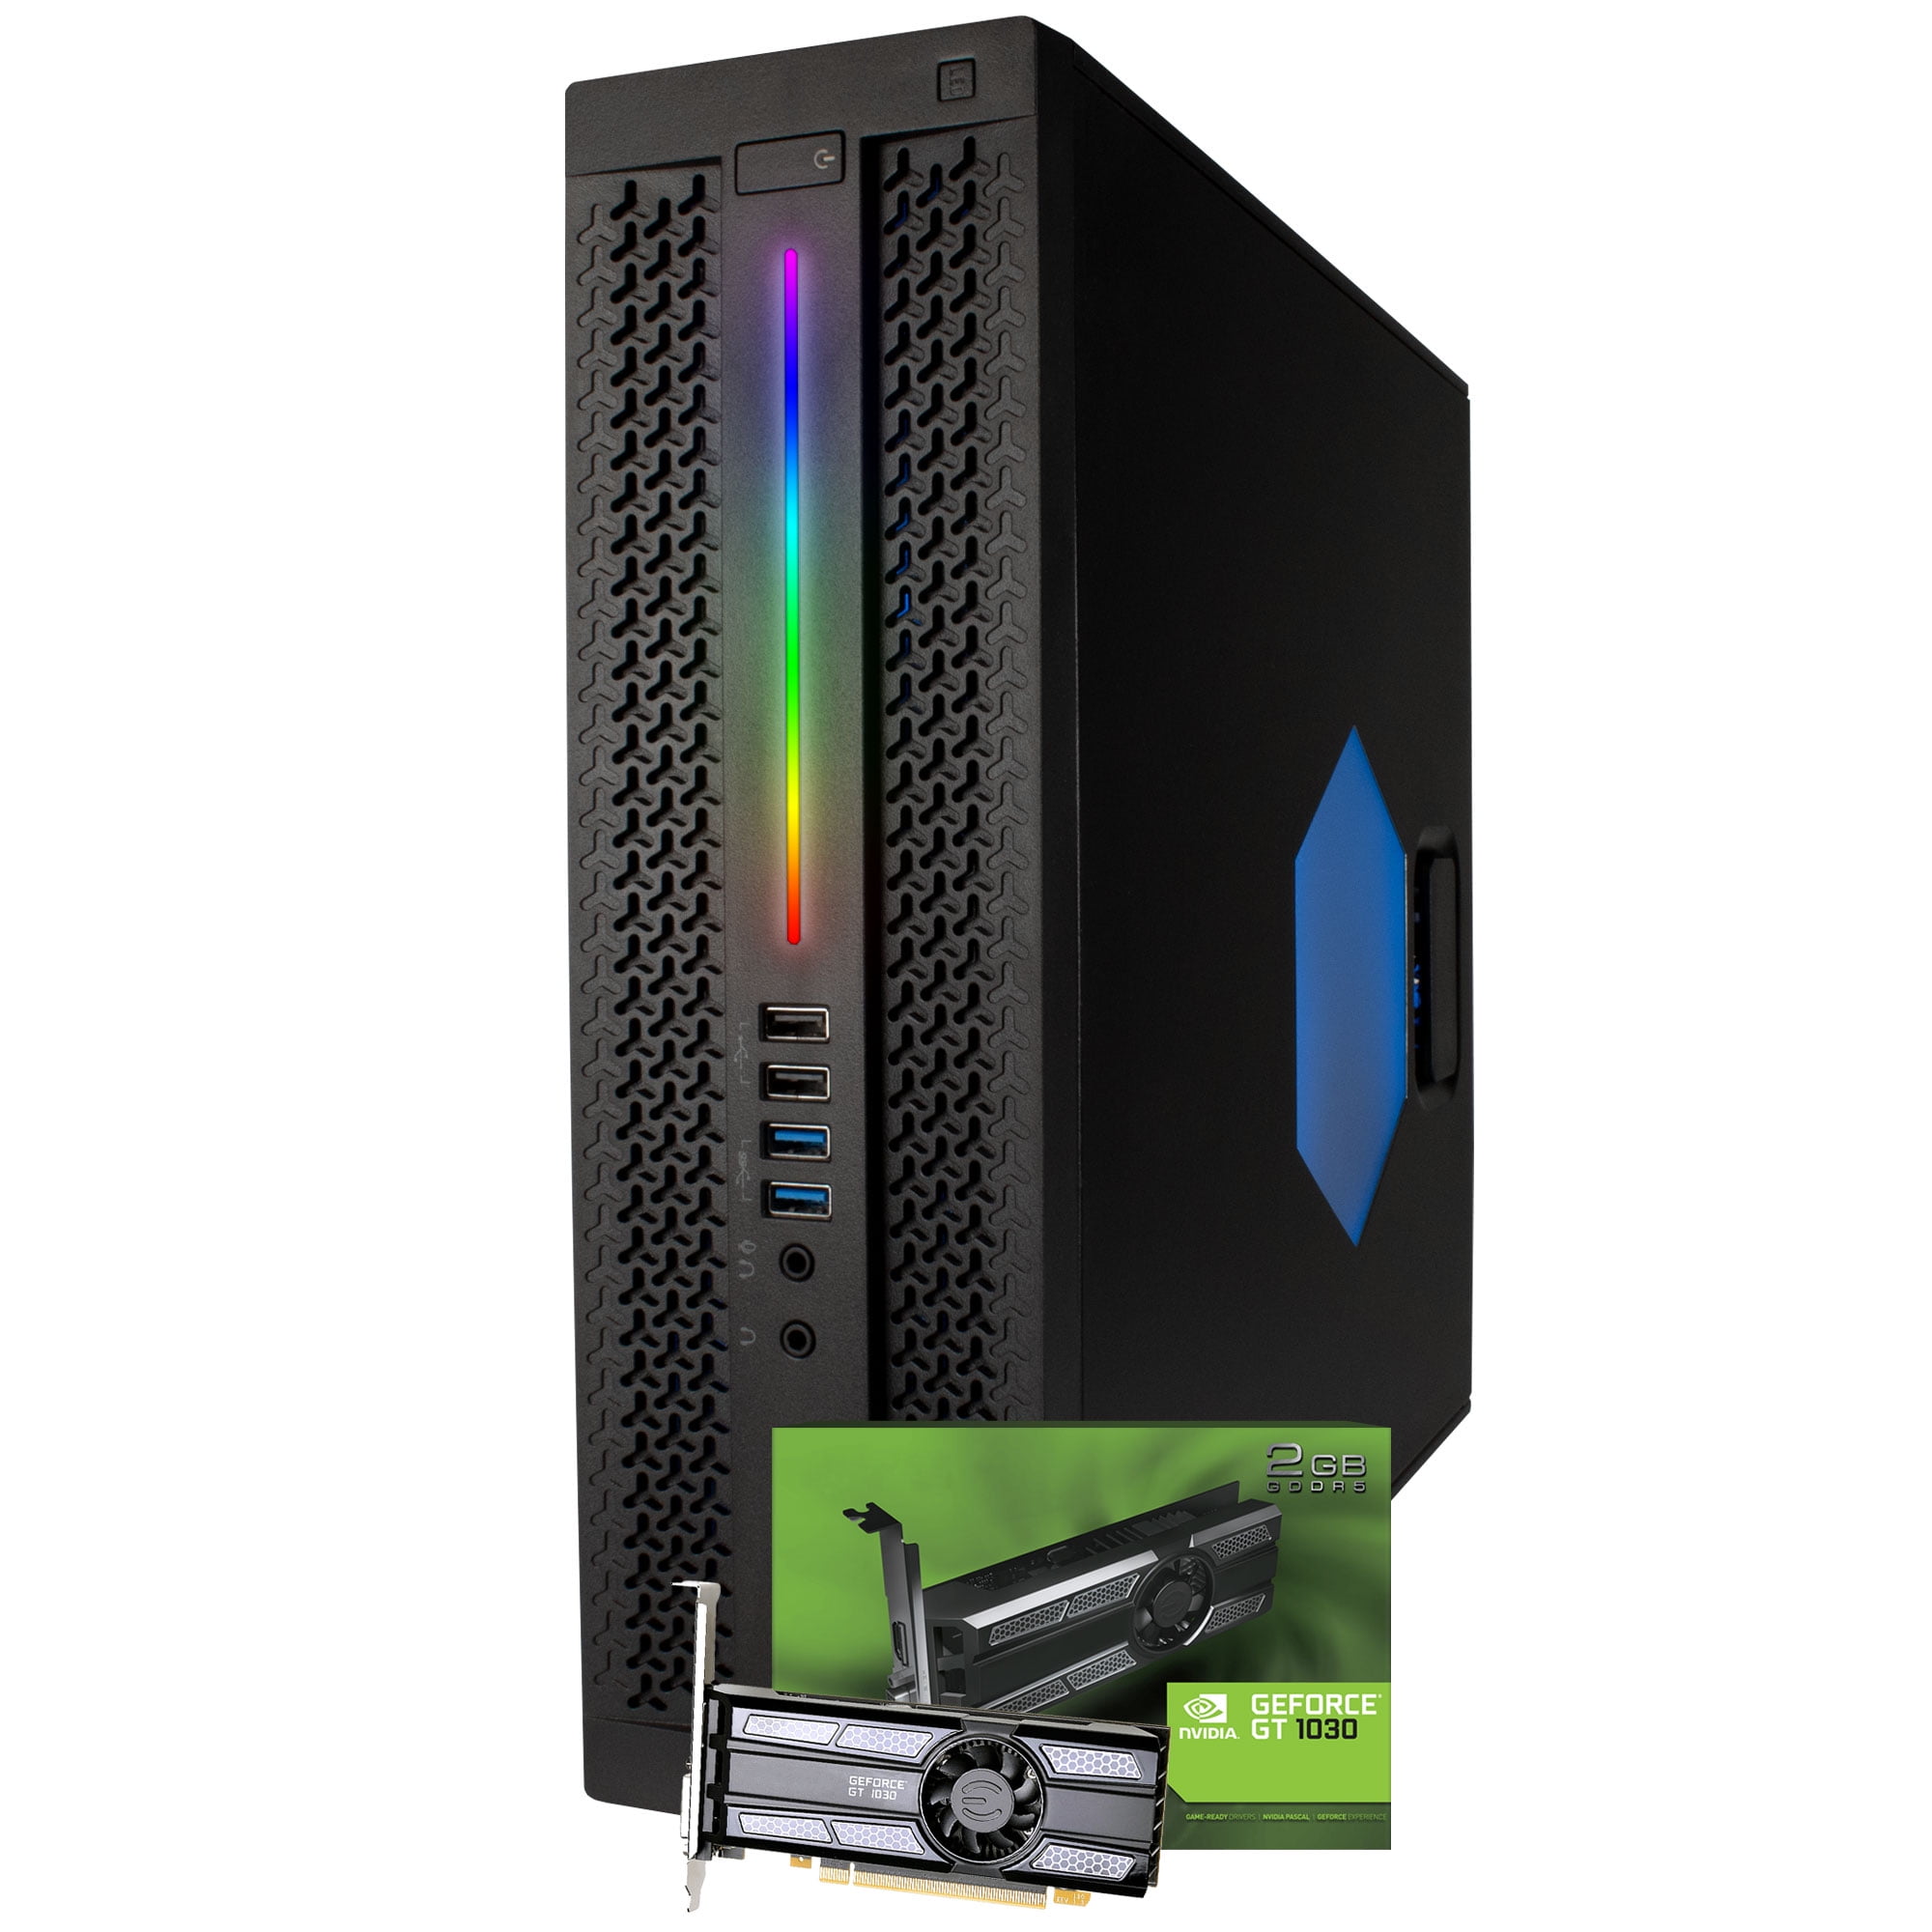  HP 800 G2 RGB Gaming PC Desktop – Intel Core i5 6th